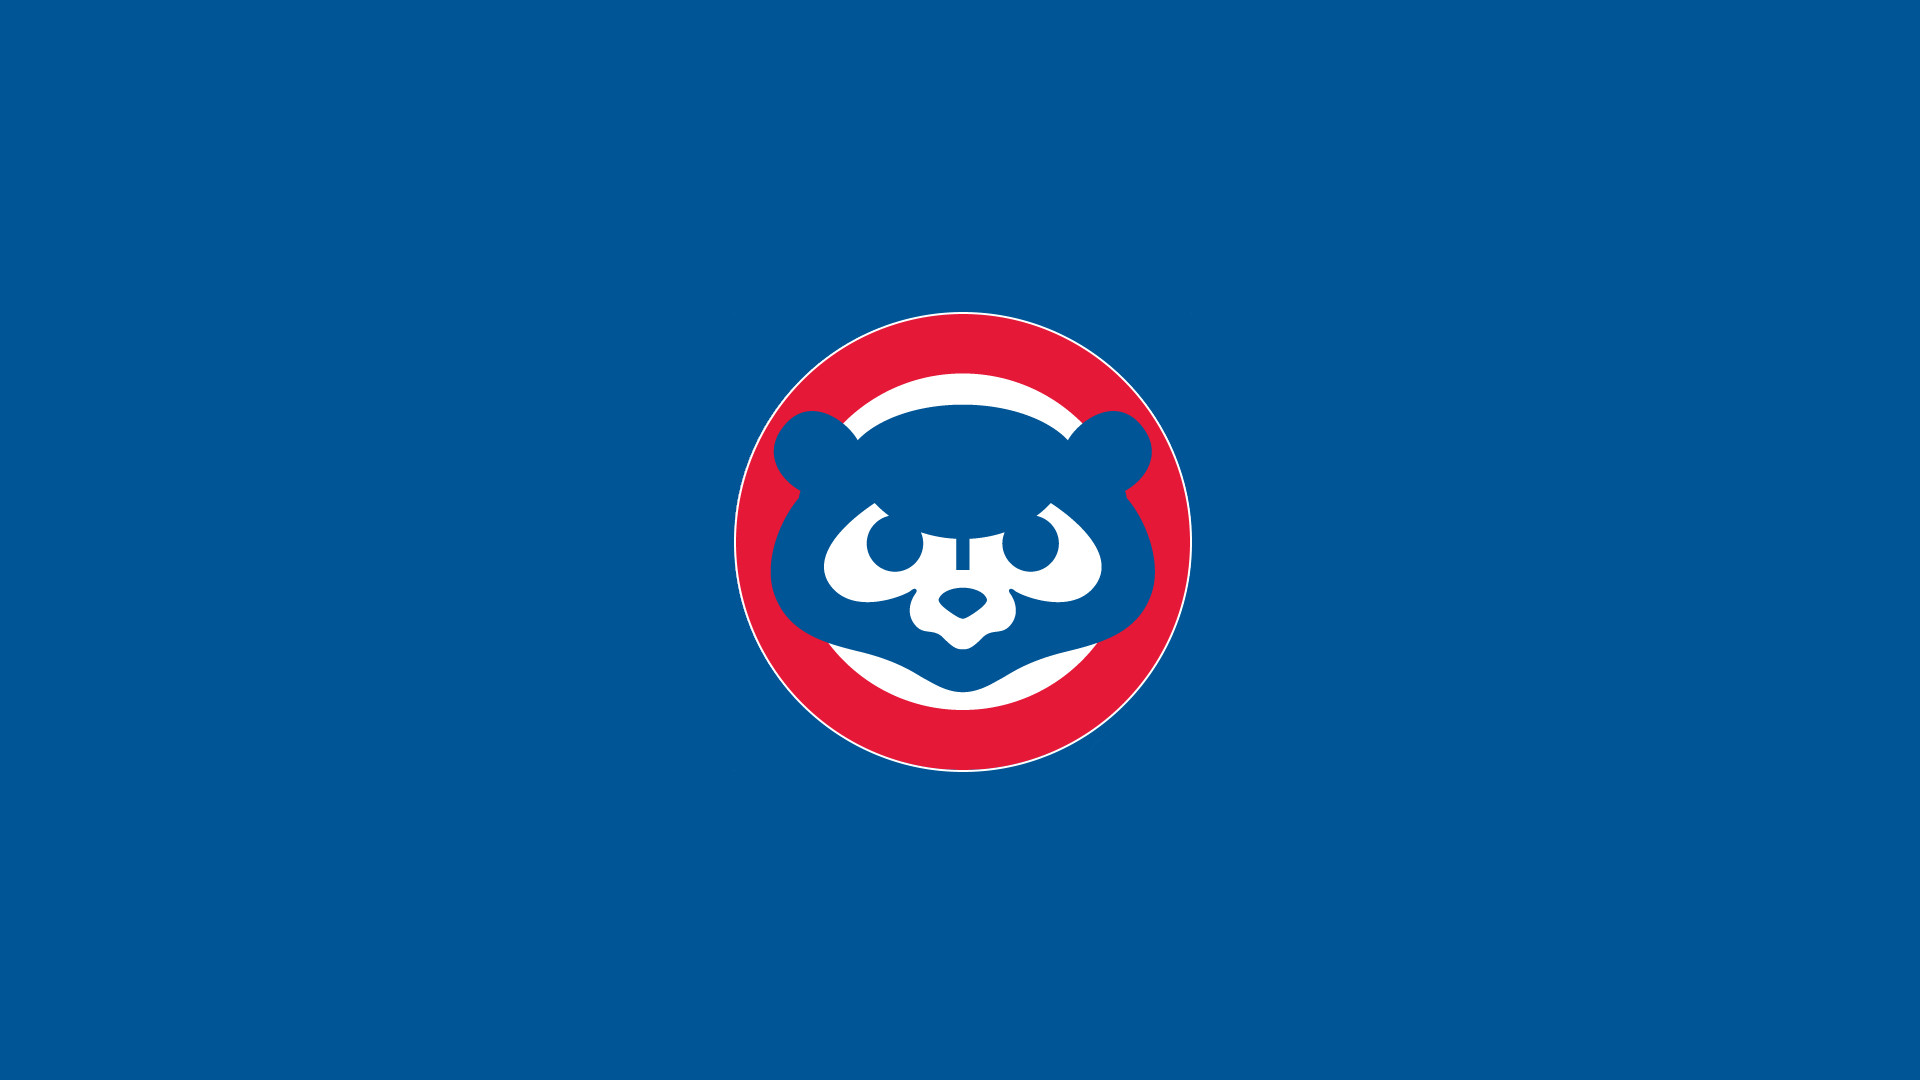 Best 20+ Cubs wallpaper ideas on Pinterest | Chicago cubs wallpaper, Did  the cubs win and Chicago cubs mlb